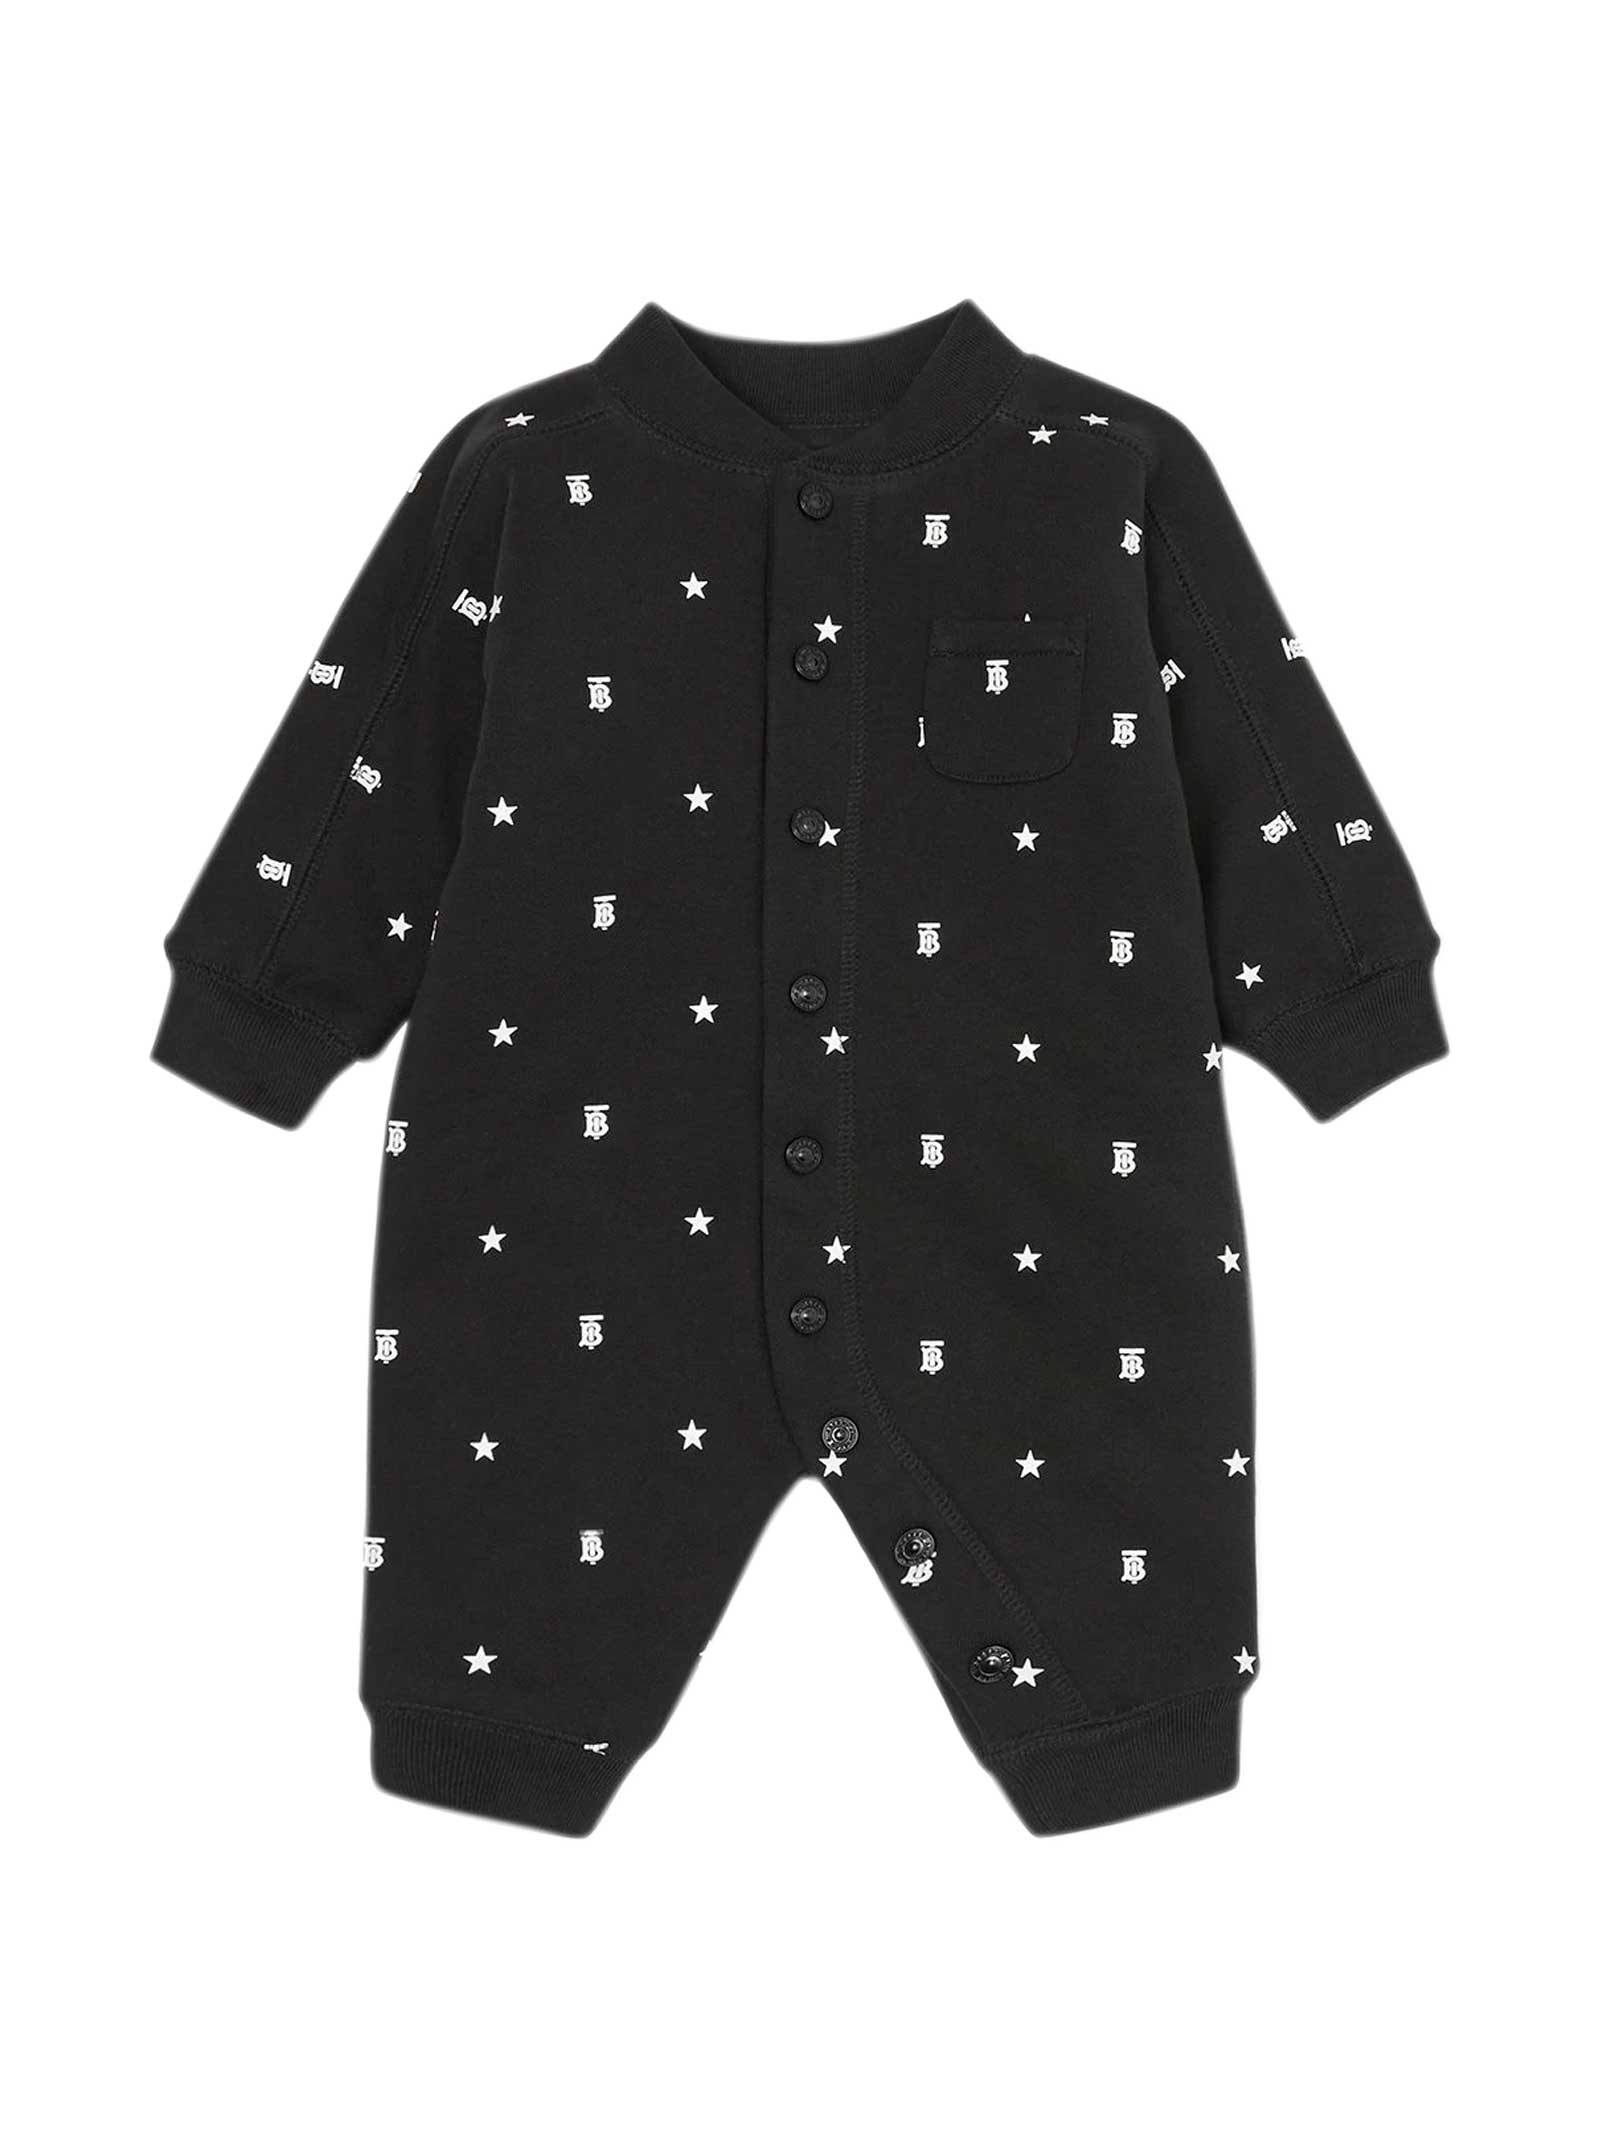 Burberry Black Baby Suit